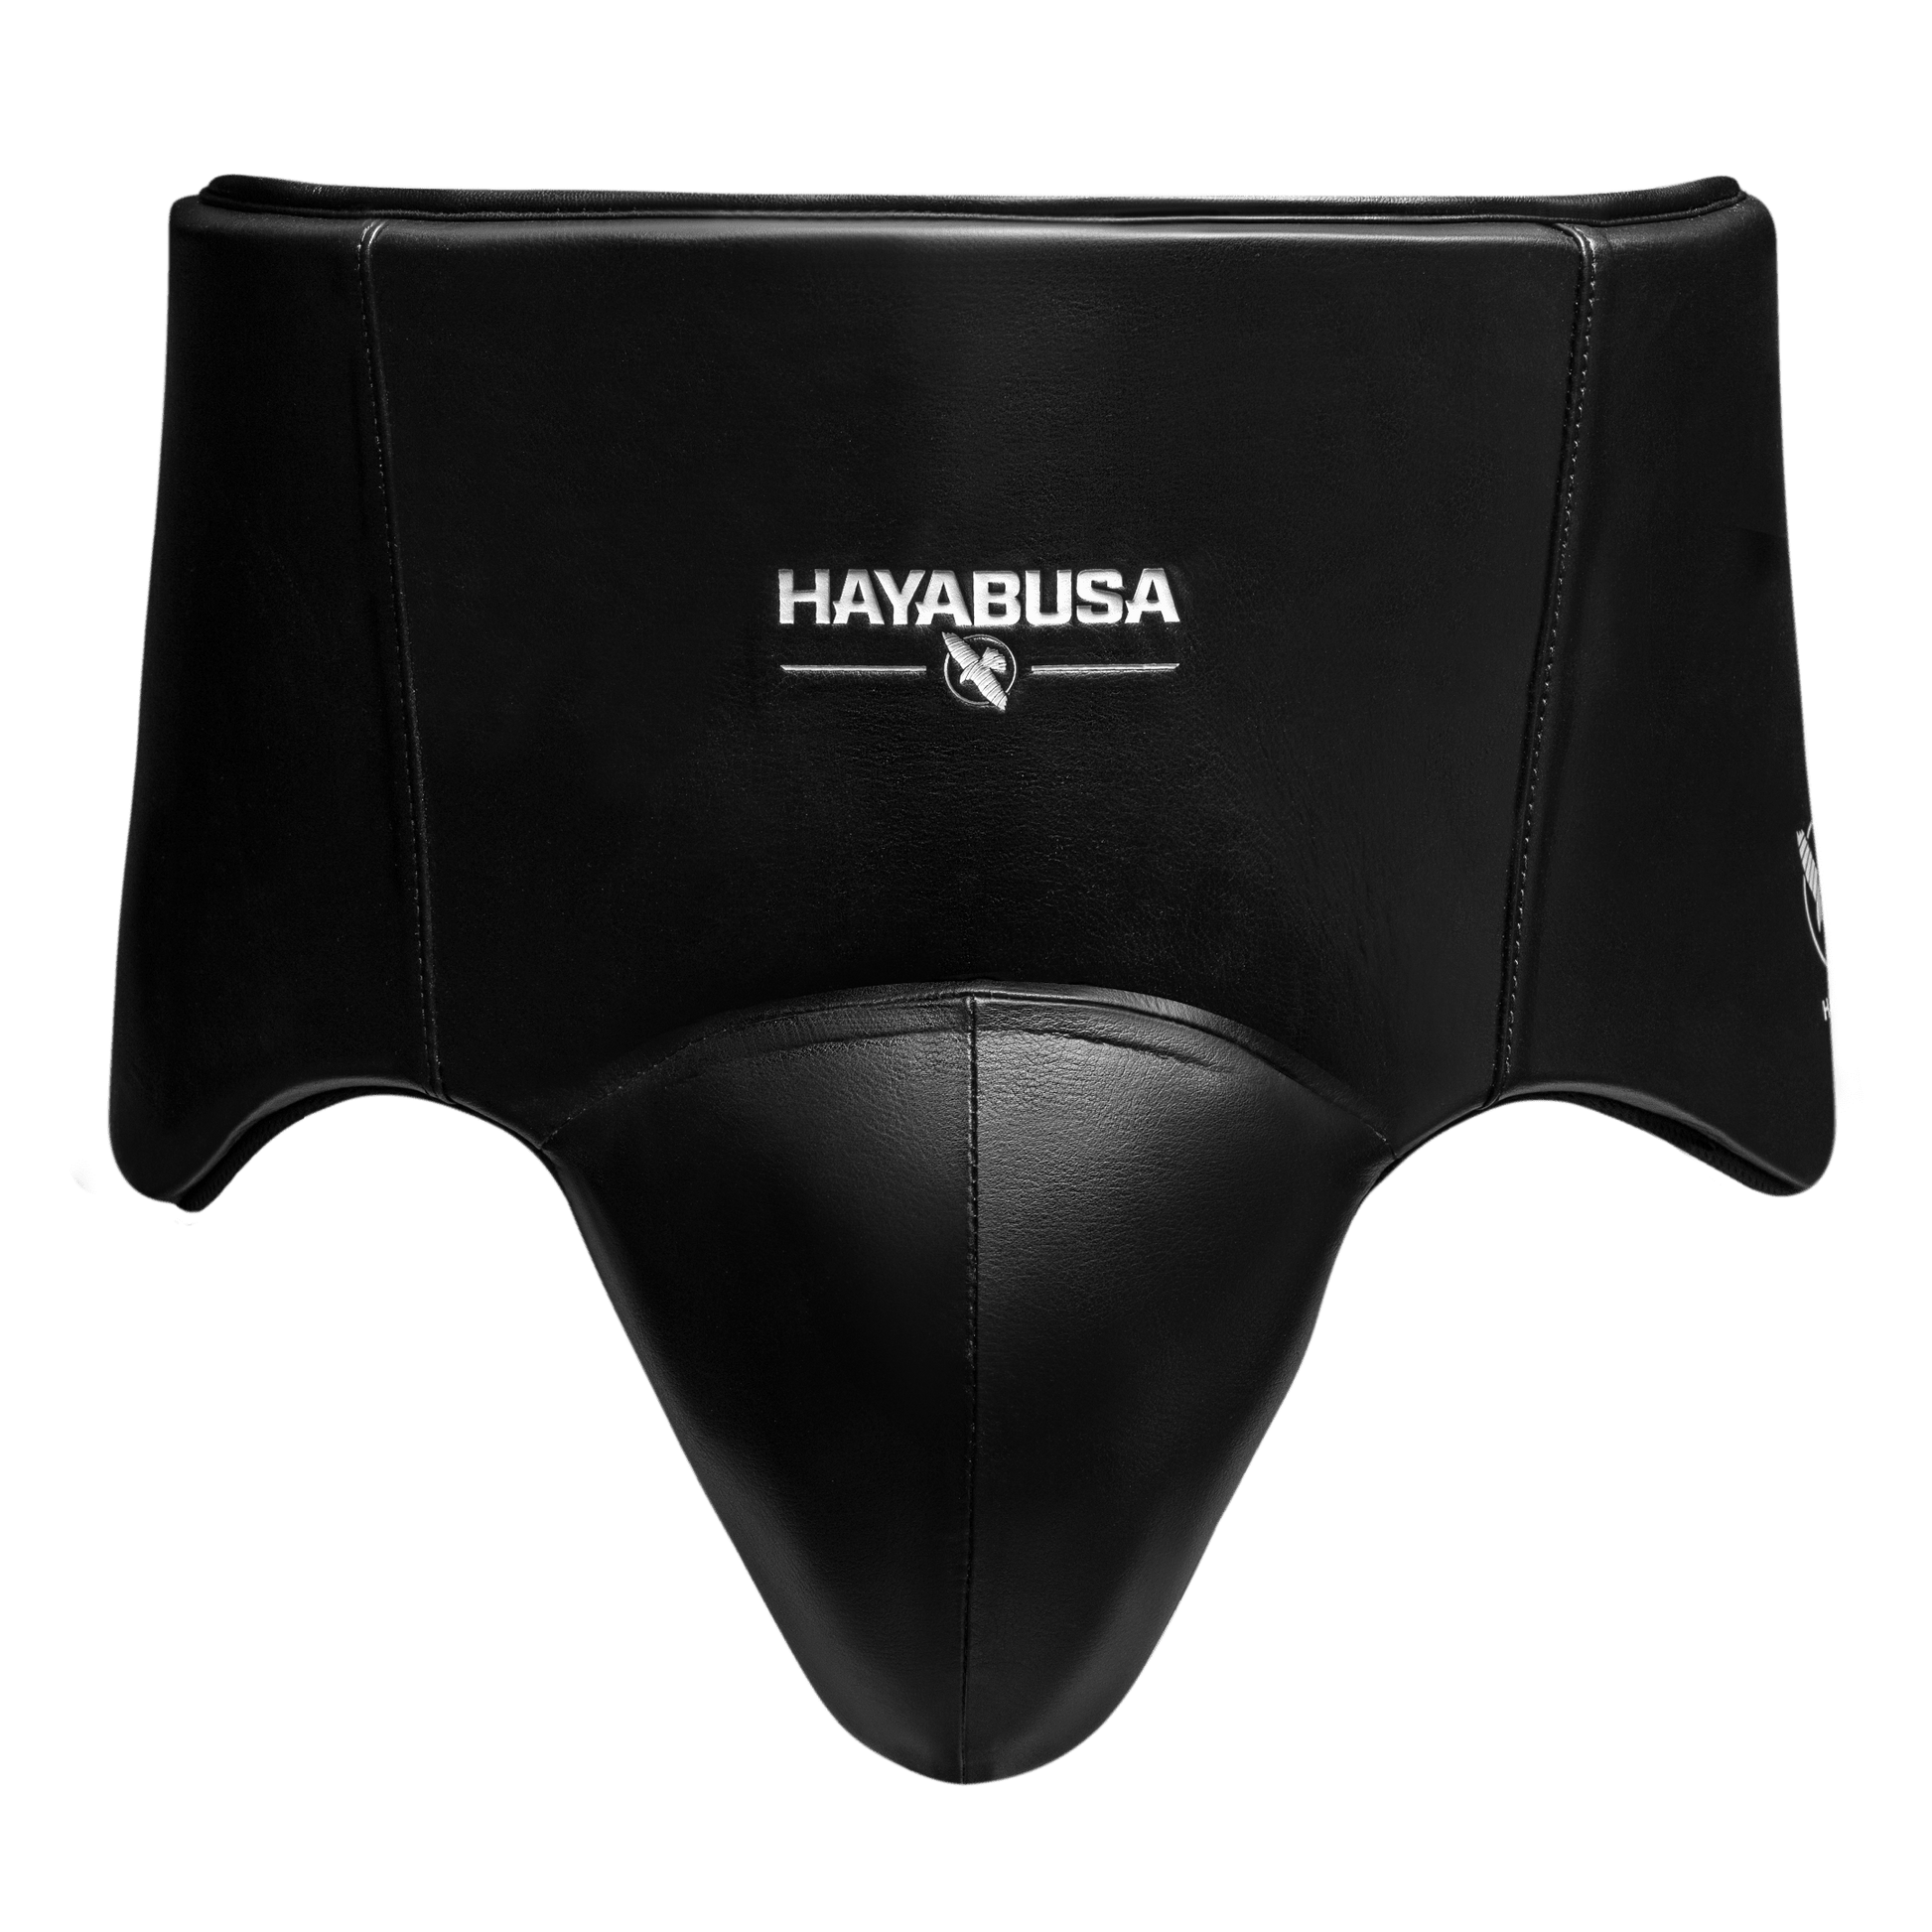 Hayabusa Pro Boxing Groin Protector - Violent Art Shop